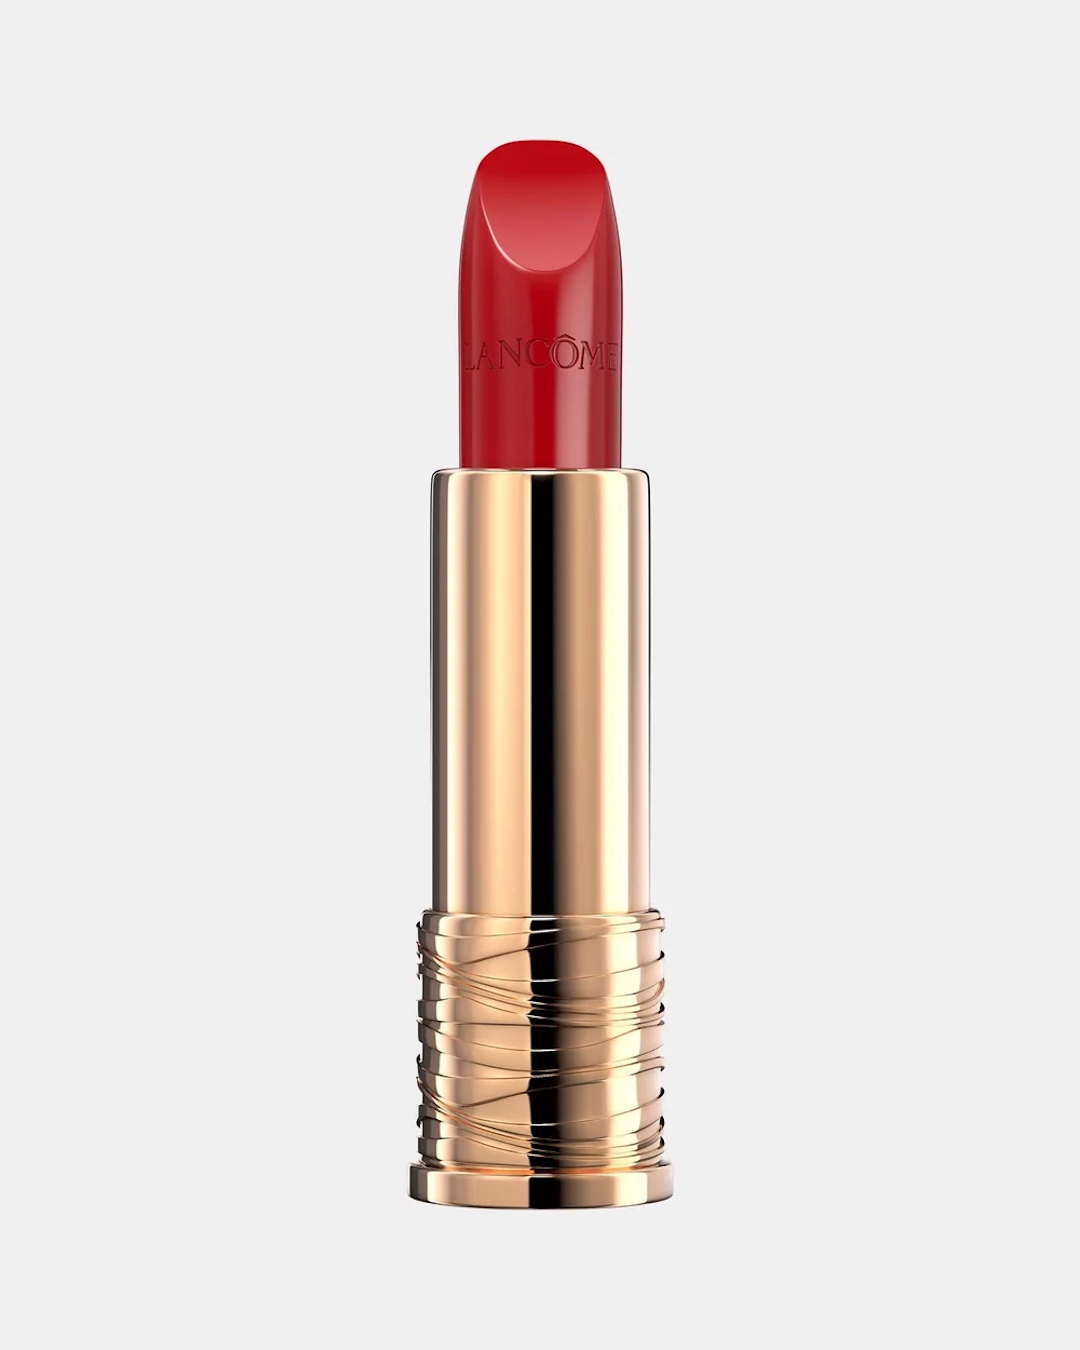 Lancome red lipstick